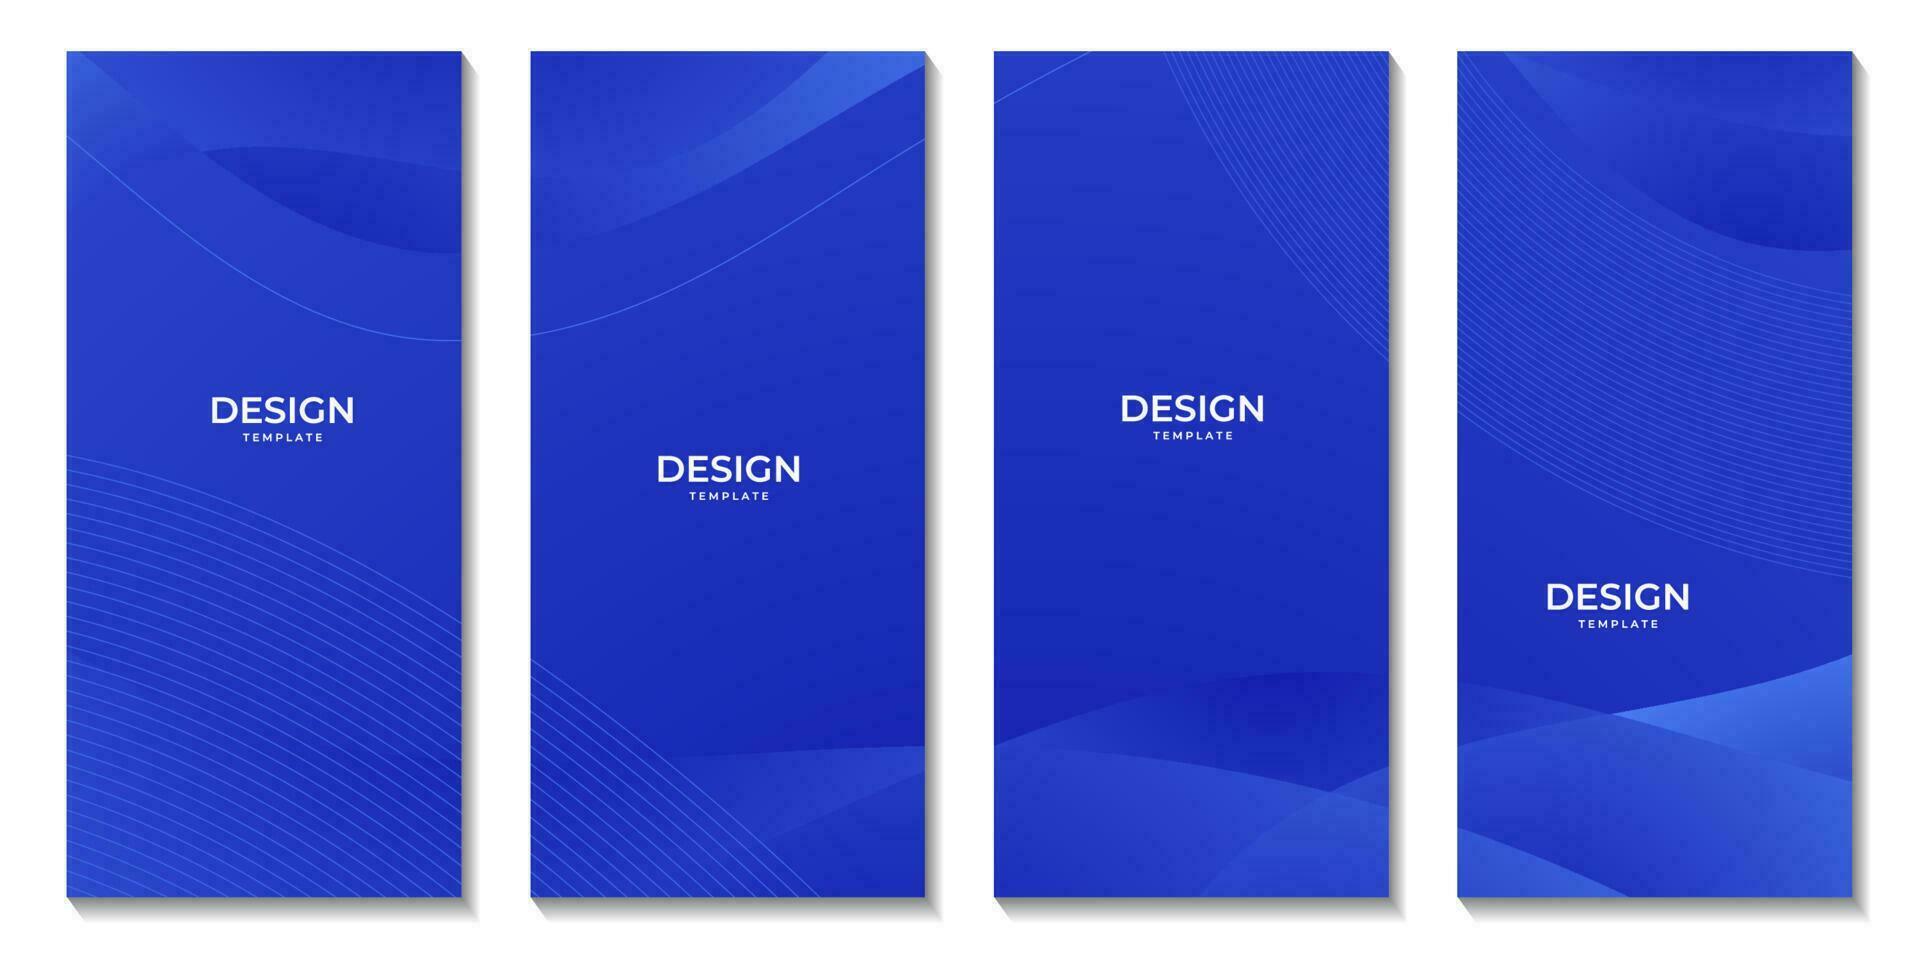 conjunto do brochuras azul onda fundo para o negócio vetor